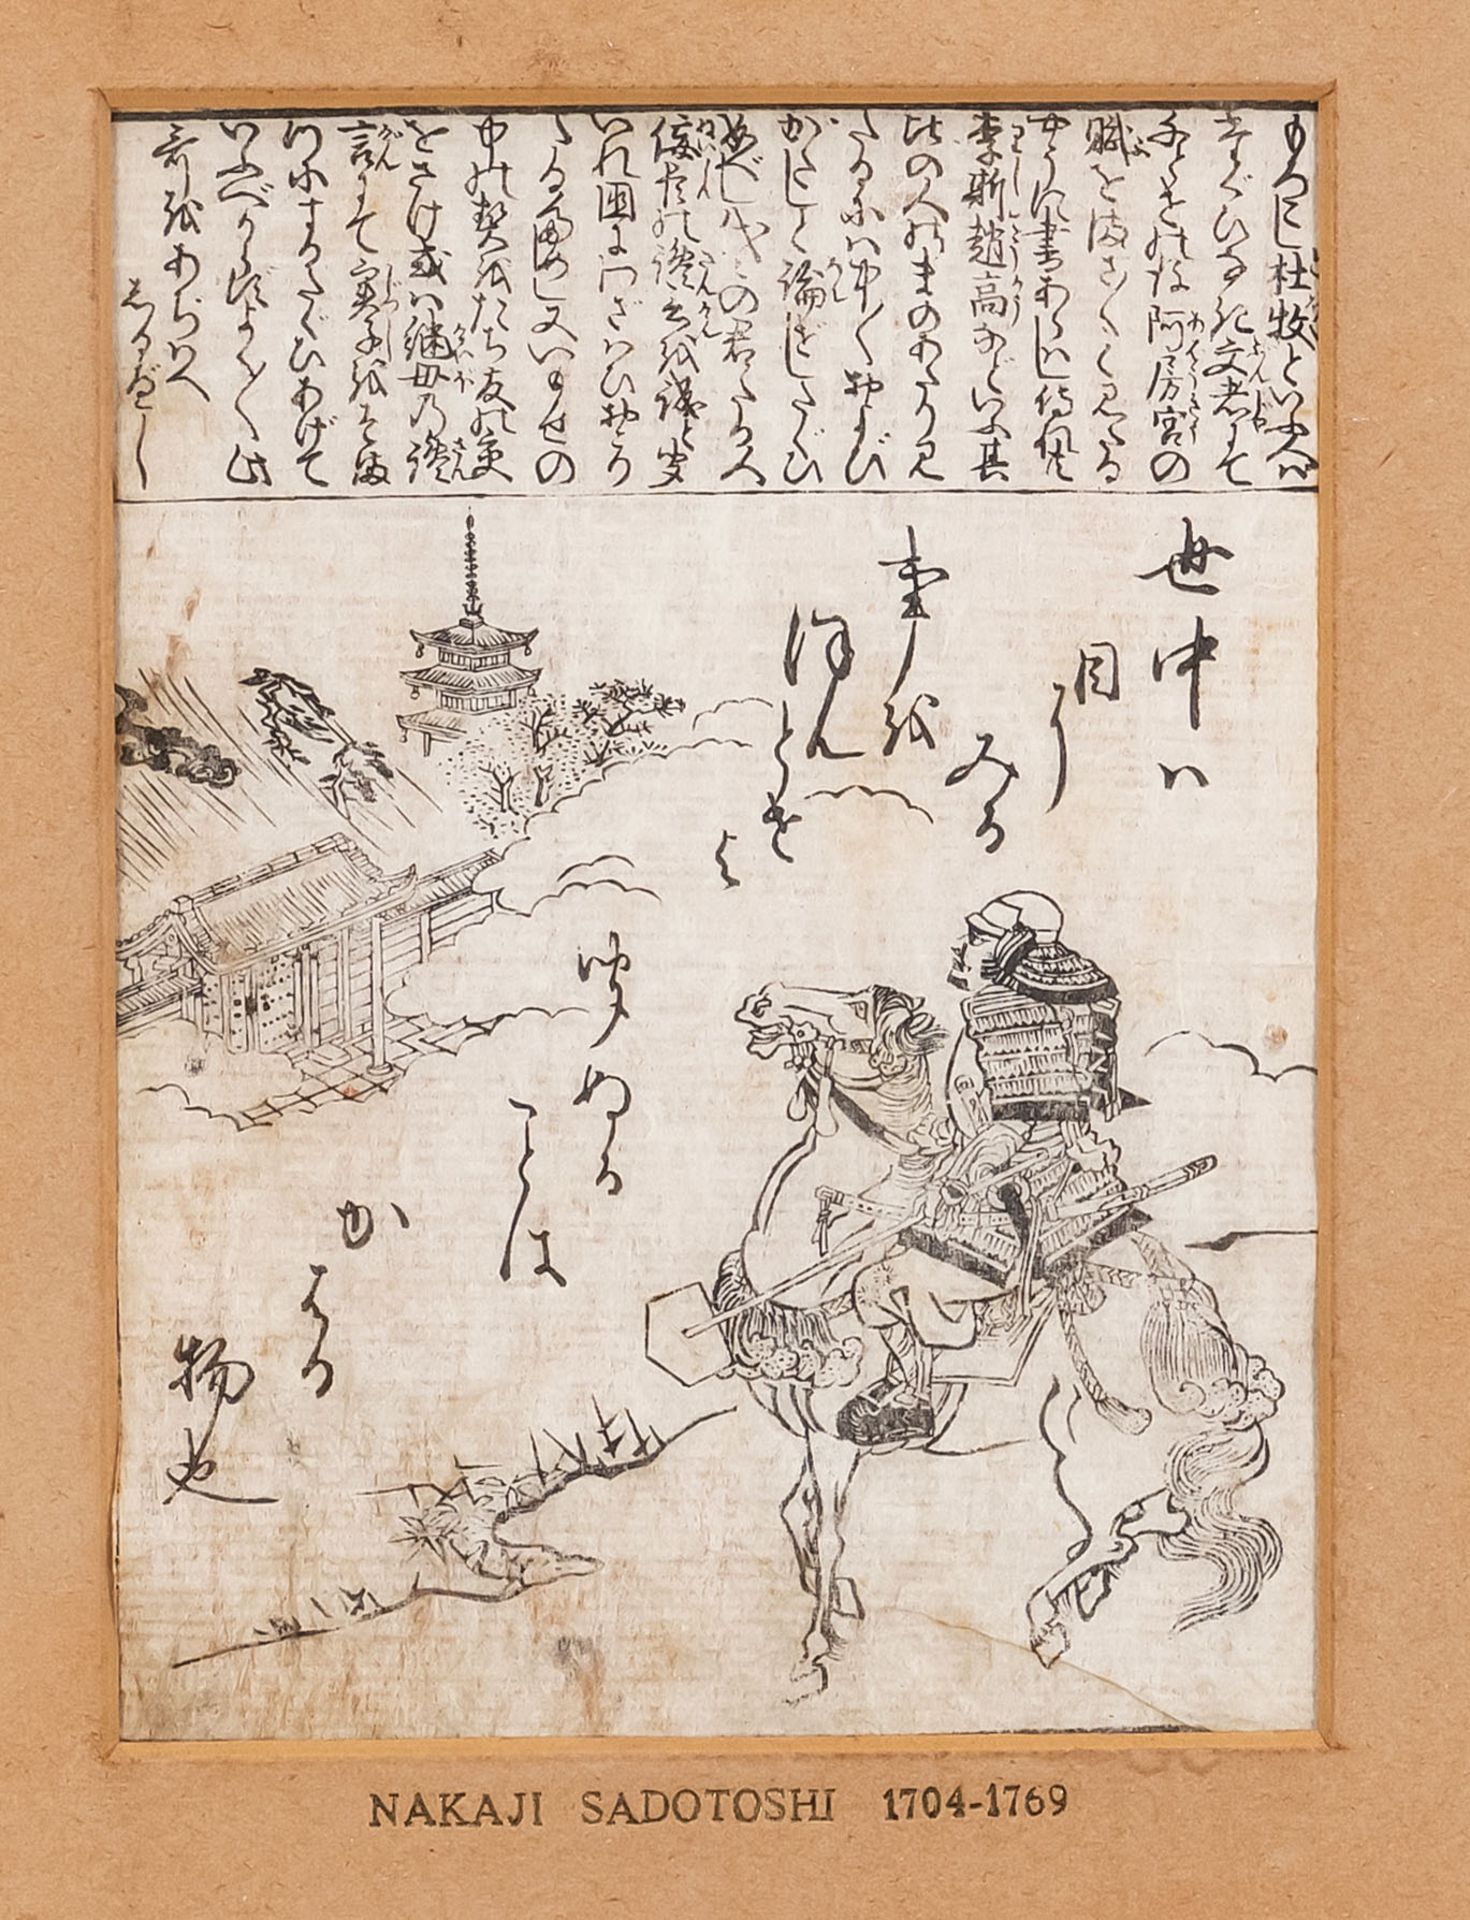 Pair of framed woodblock prints, Japan, 18th century (Edo). 1 x inscribed Nakaji Sadotoshi 1704- - Image 2 of 2